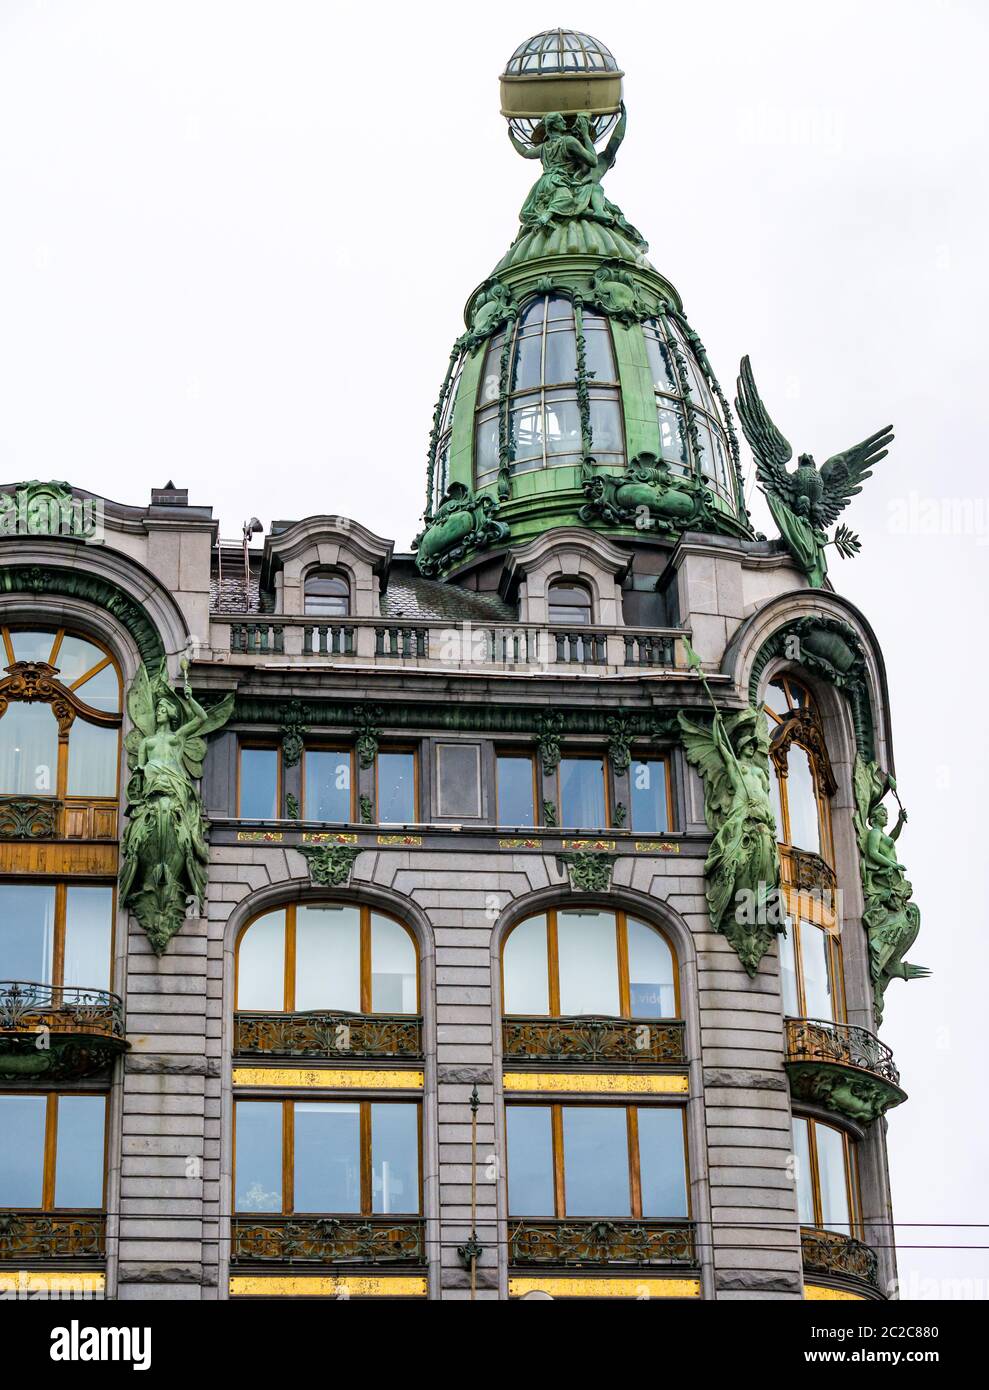 Singer Company Building Jugendstil-Architektur, Newski Prospekt, jetzt Dom Knigi, St. Petersburg, Russland Stockfoto